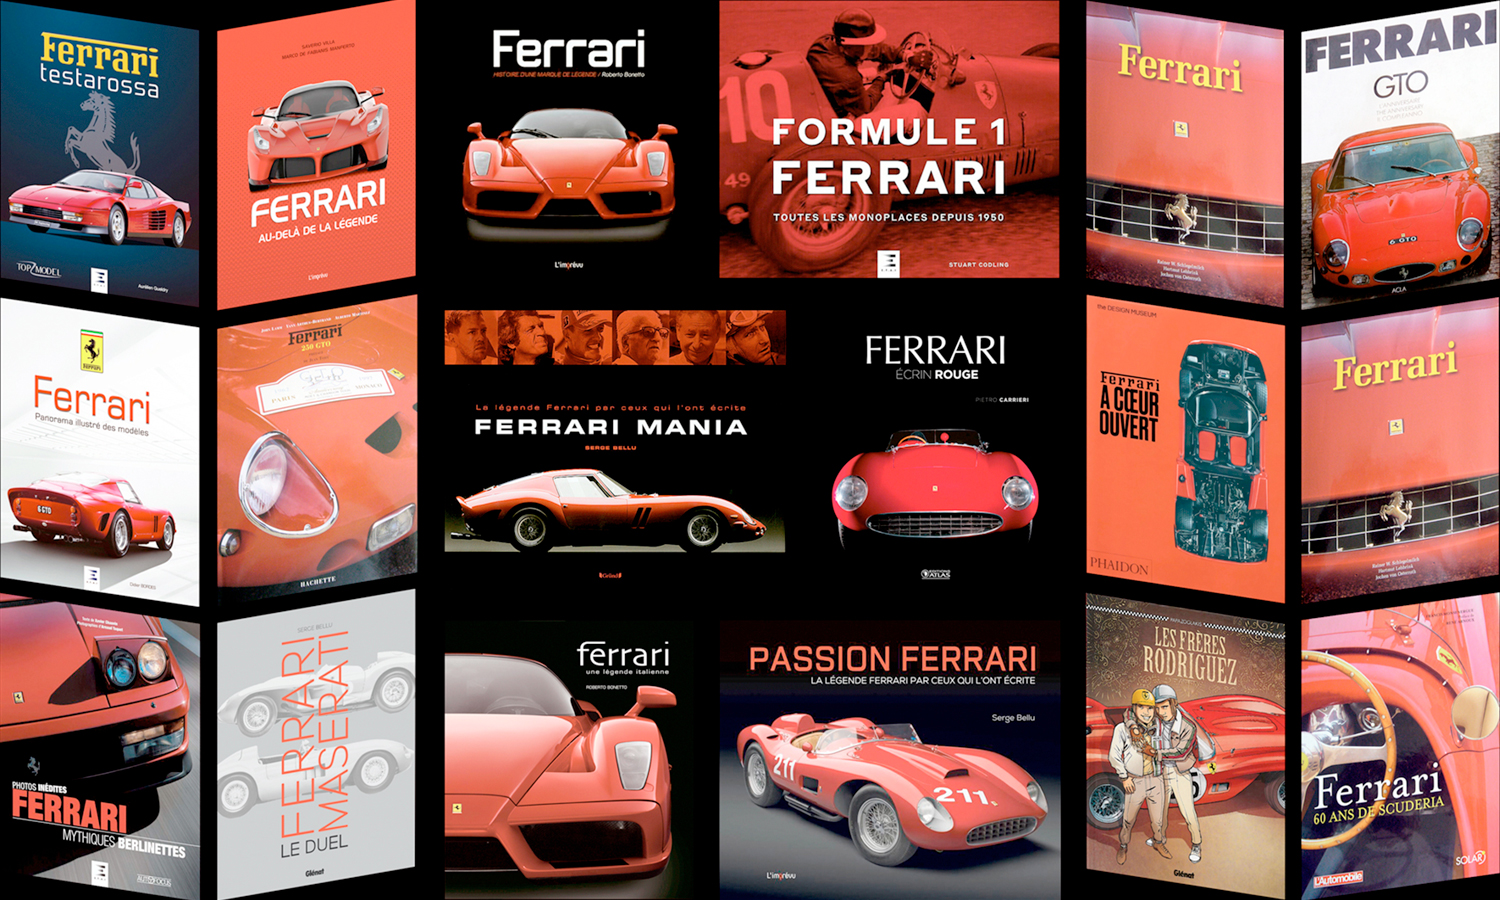 Une voiture, une miniature : Ferrari 250 GTO – Filrouge automobile